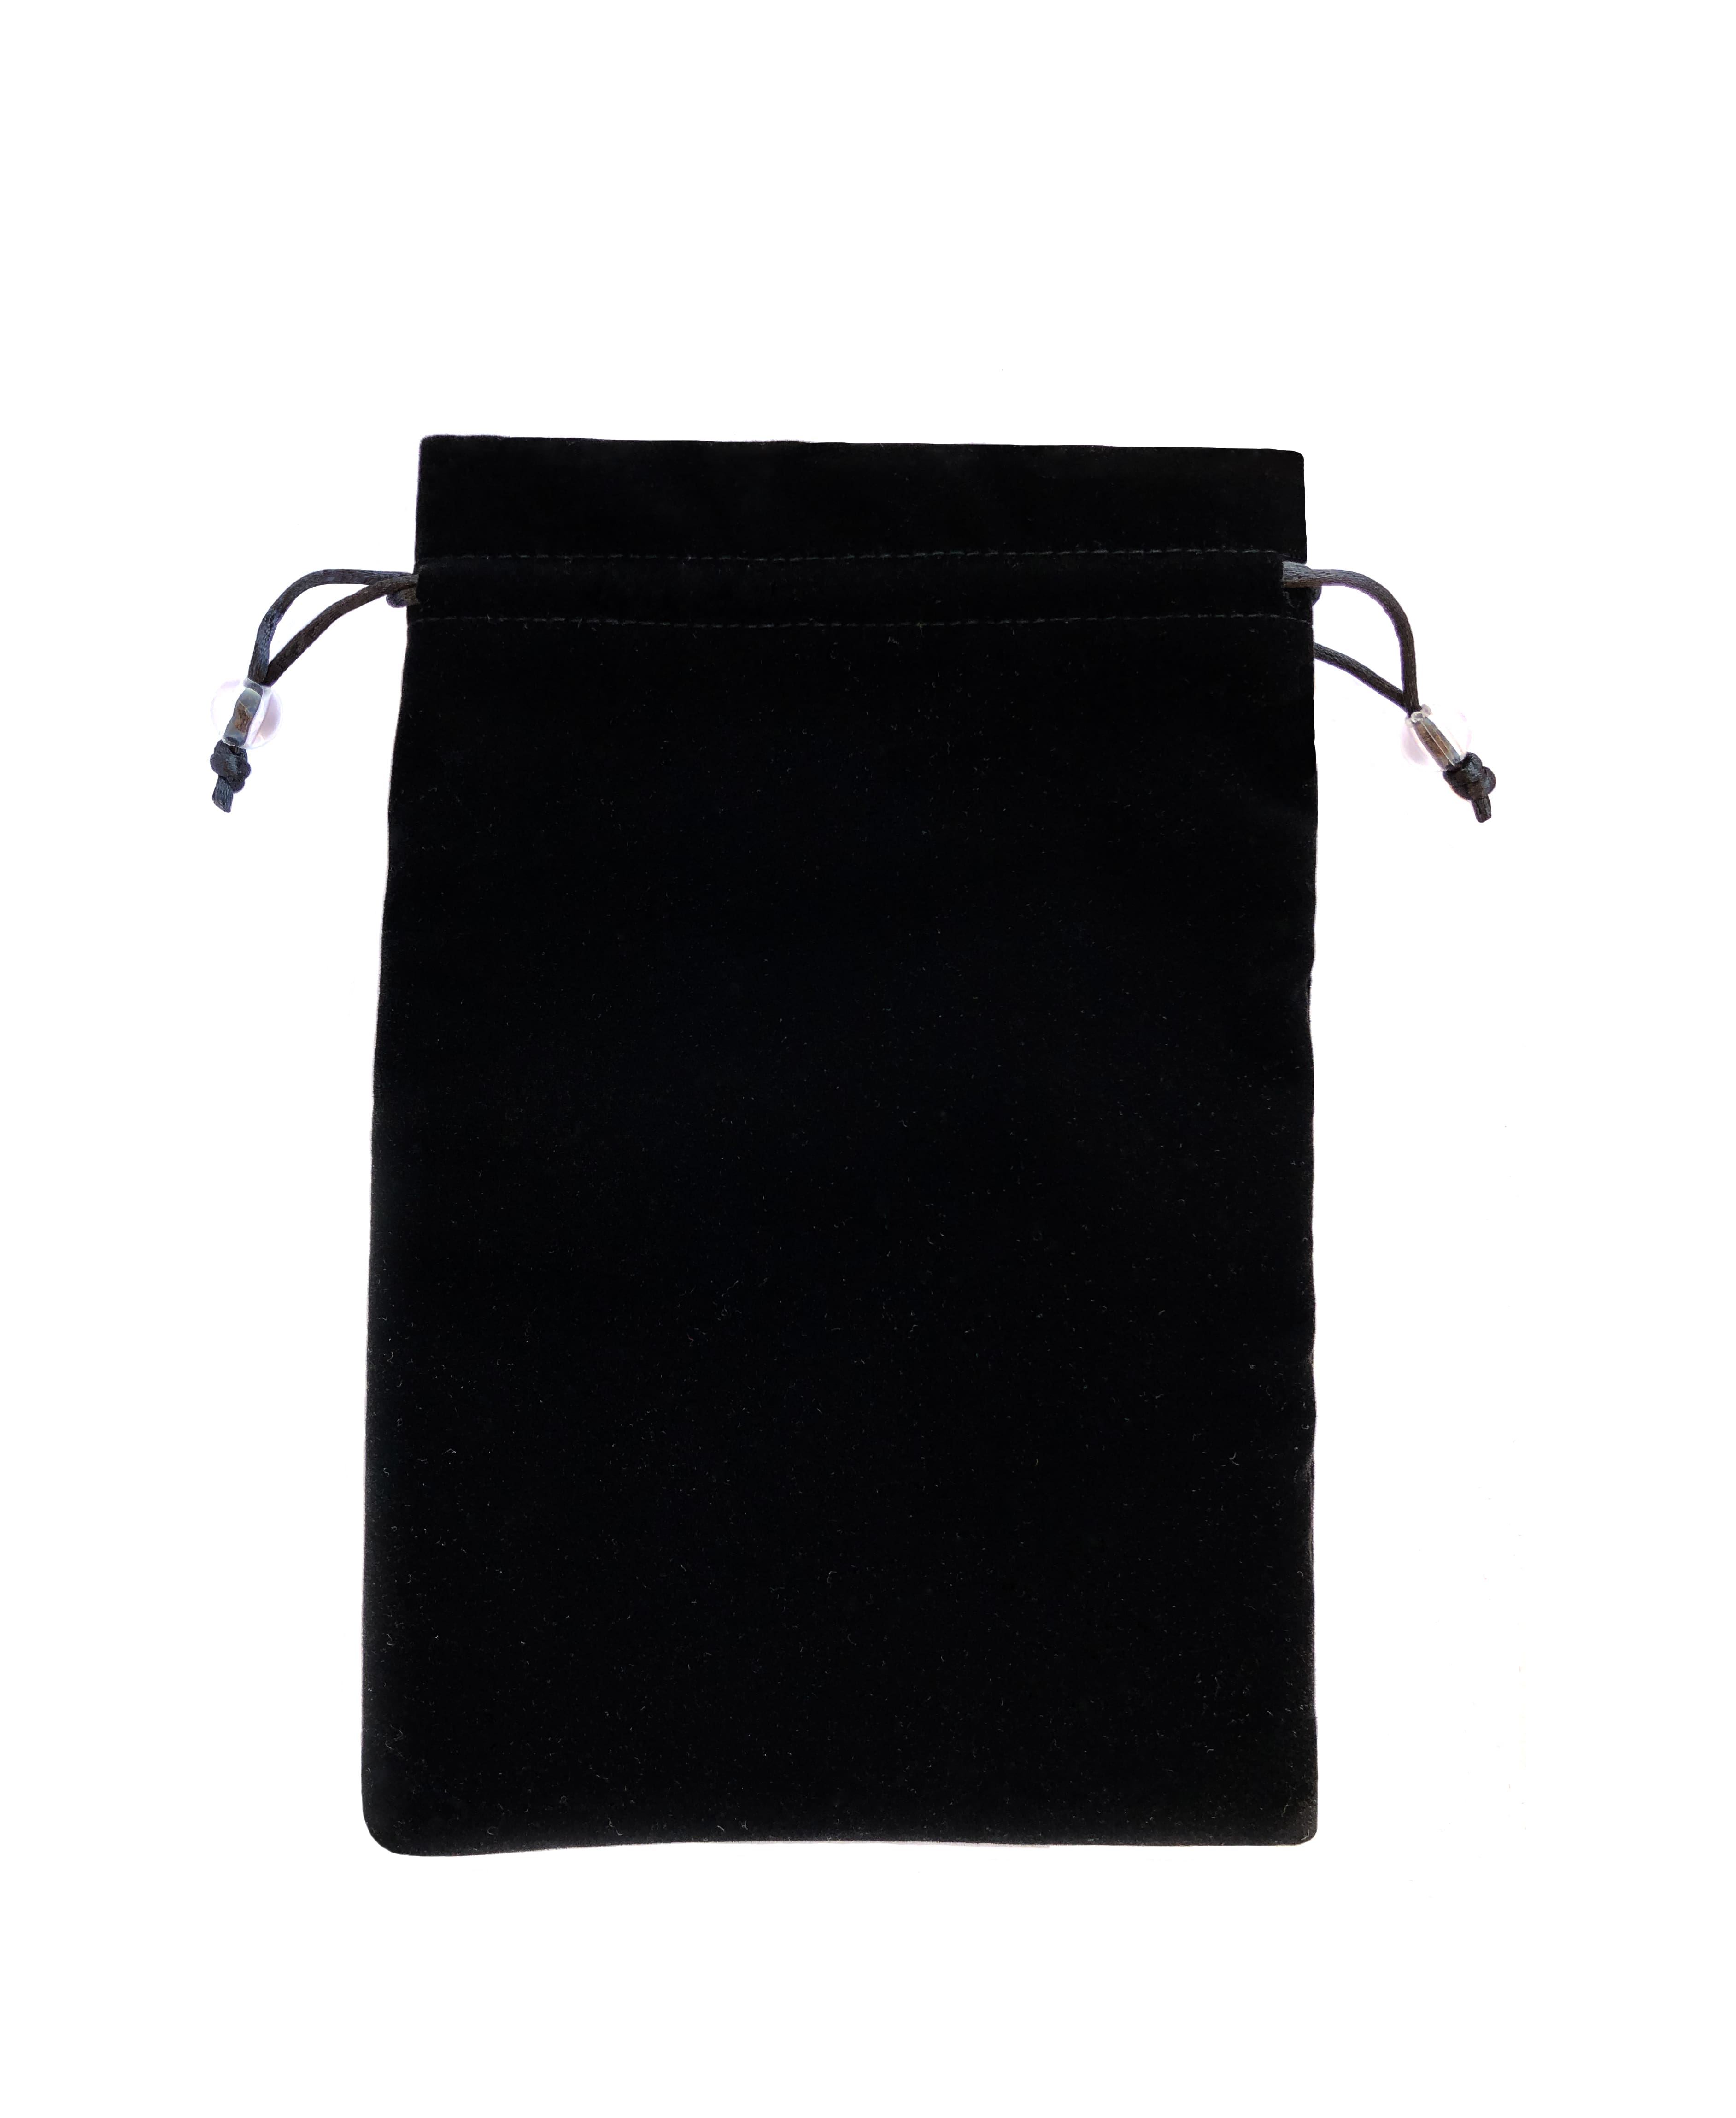 EFENDIZ Large Black Velvet Drawstring Pouch, Red Velvet Lining Inside, 9 x 11.4 INCHES. Great Bag for Organizing and Storage at Home or When